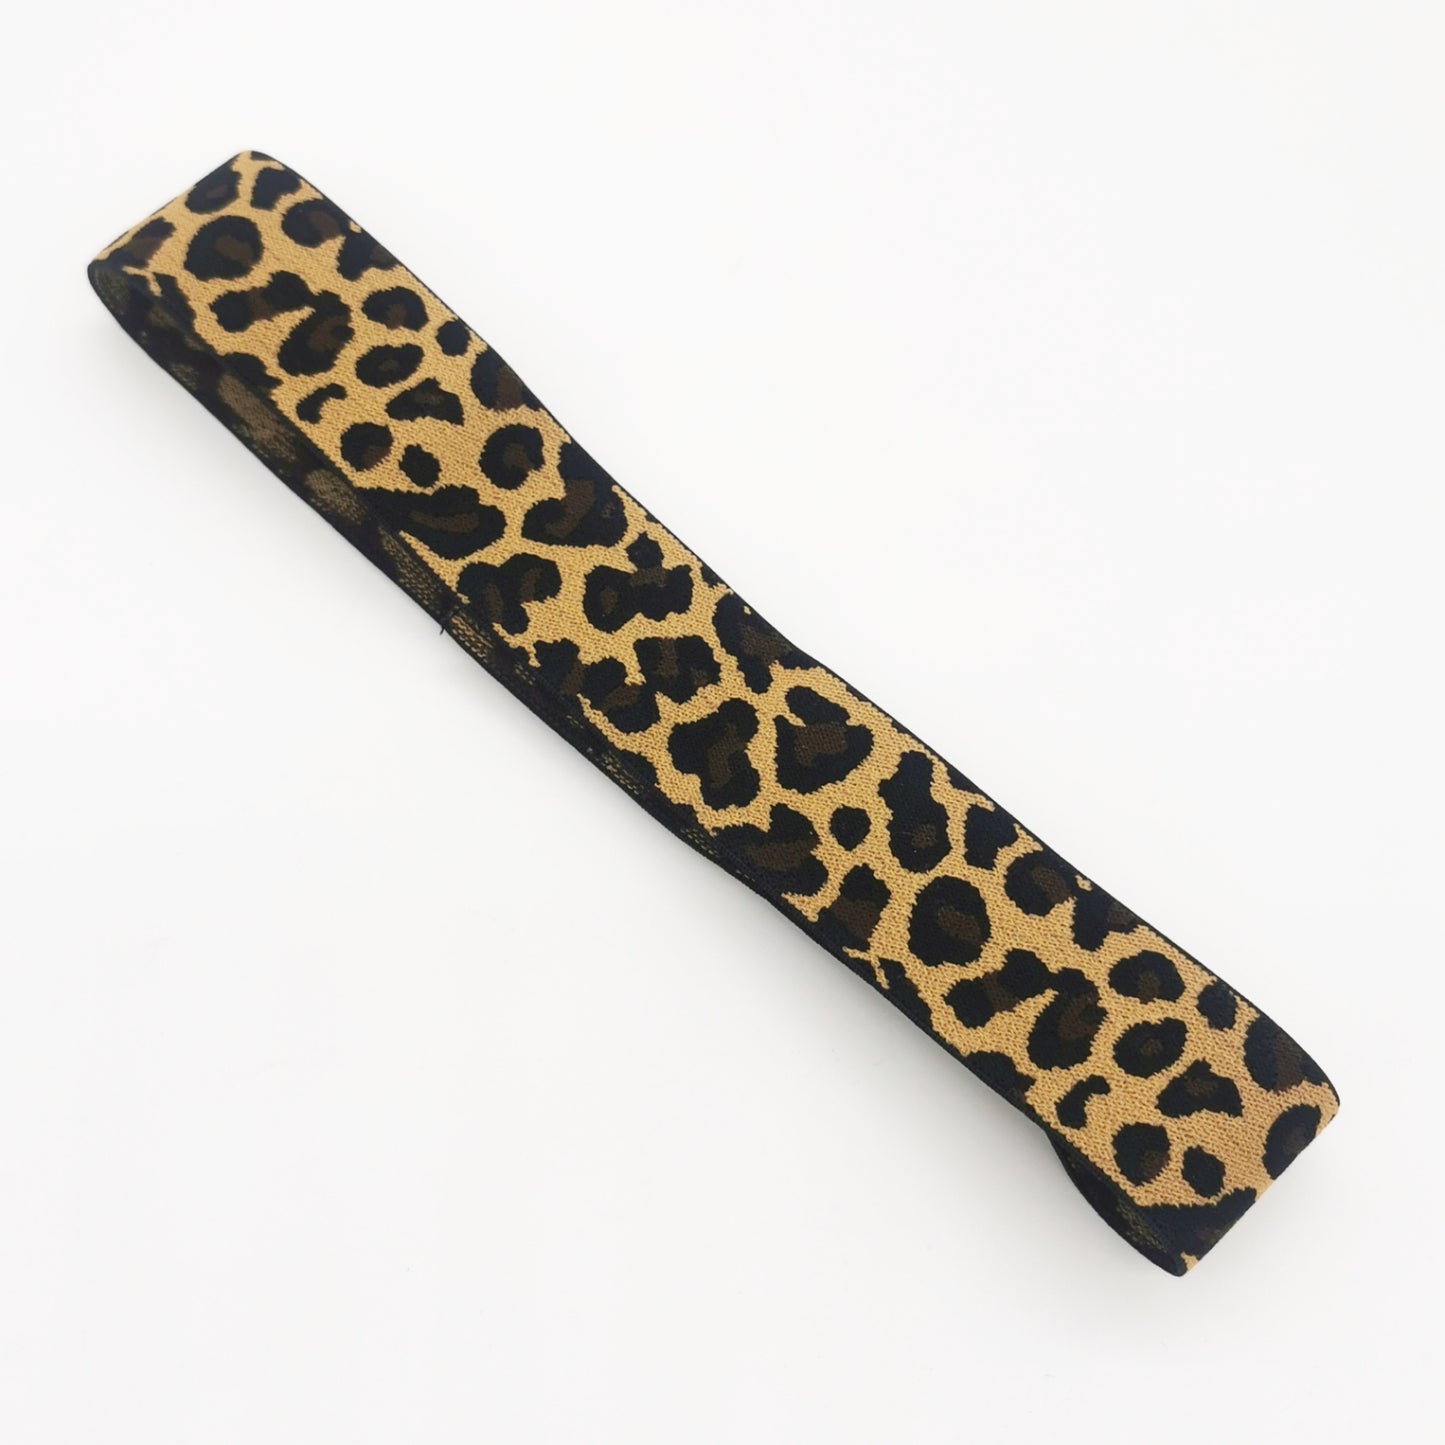 Leopard Print Velcro Headband